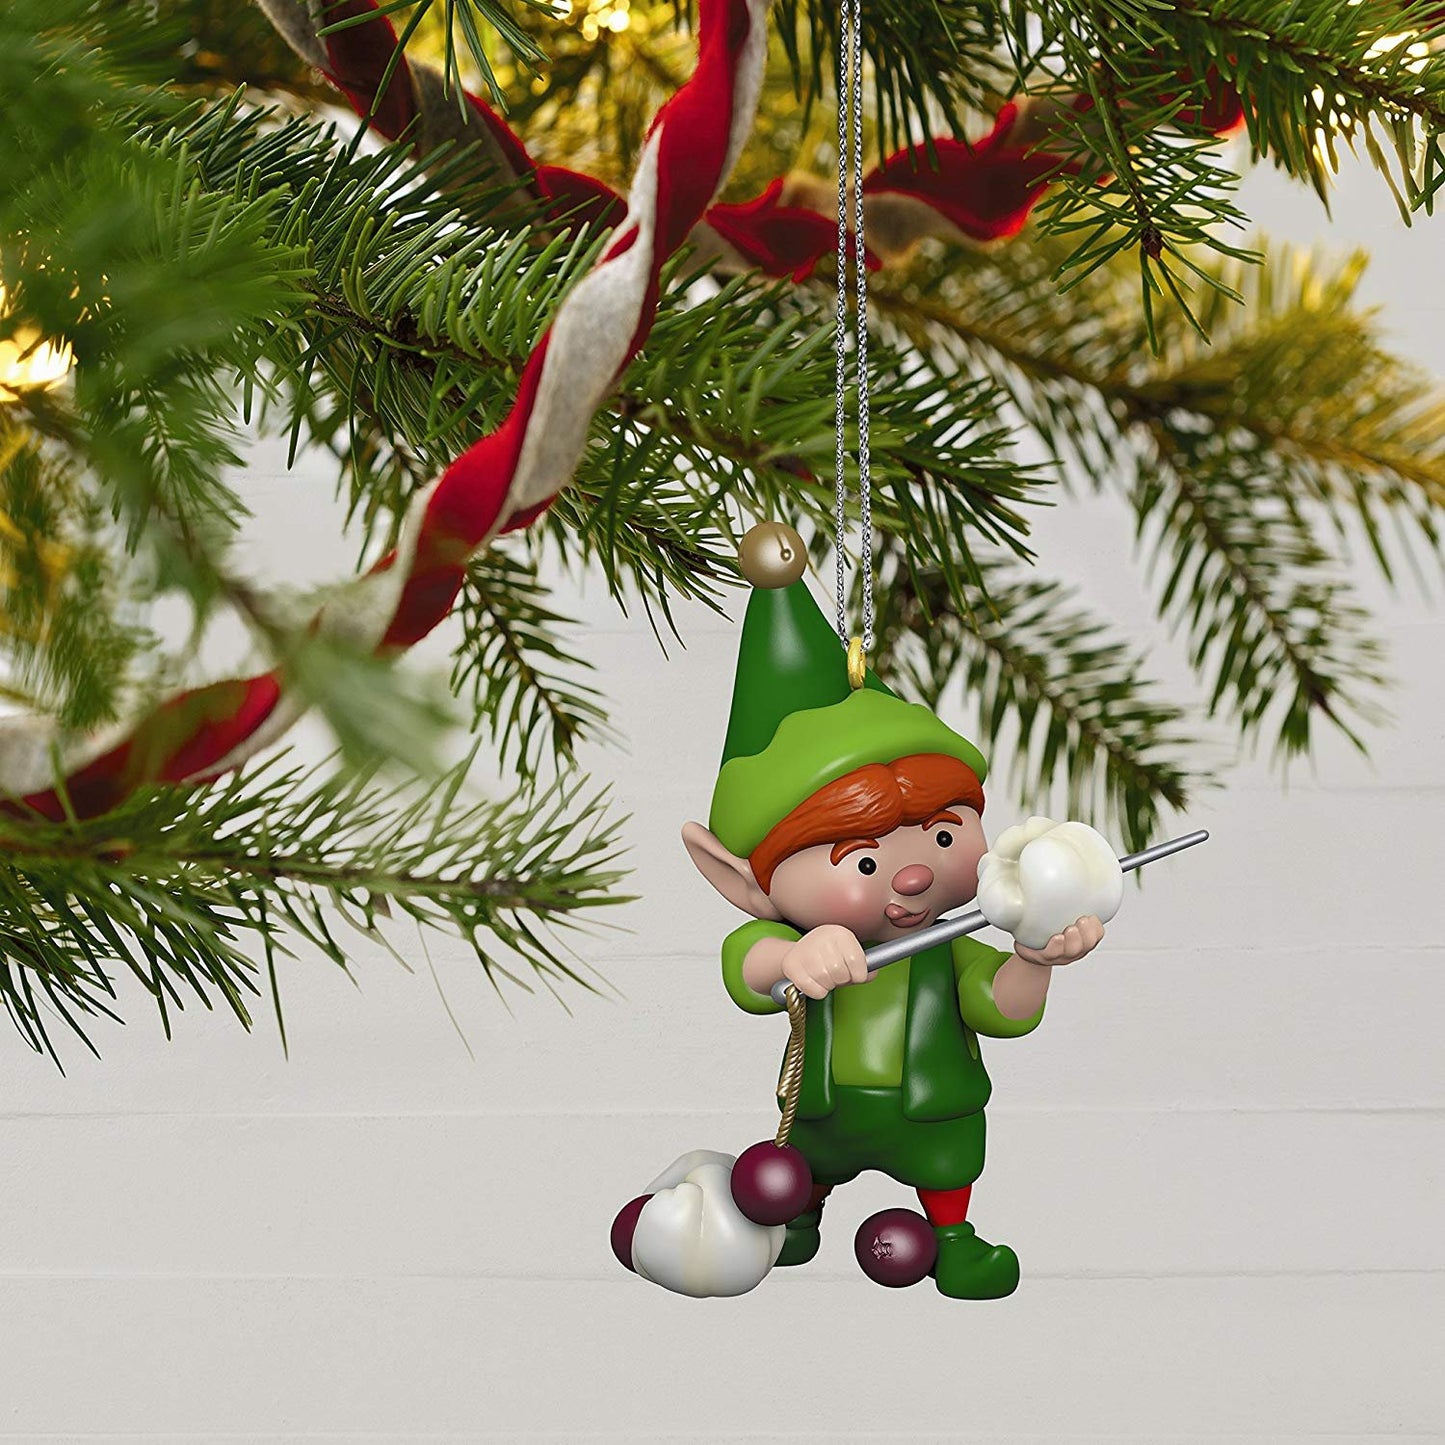 Hallmark Keepsake Christmas Ornament 2018 Year Dated, North Pole Tree Trimmers Elf Stringing Popcorn